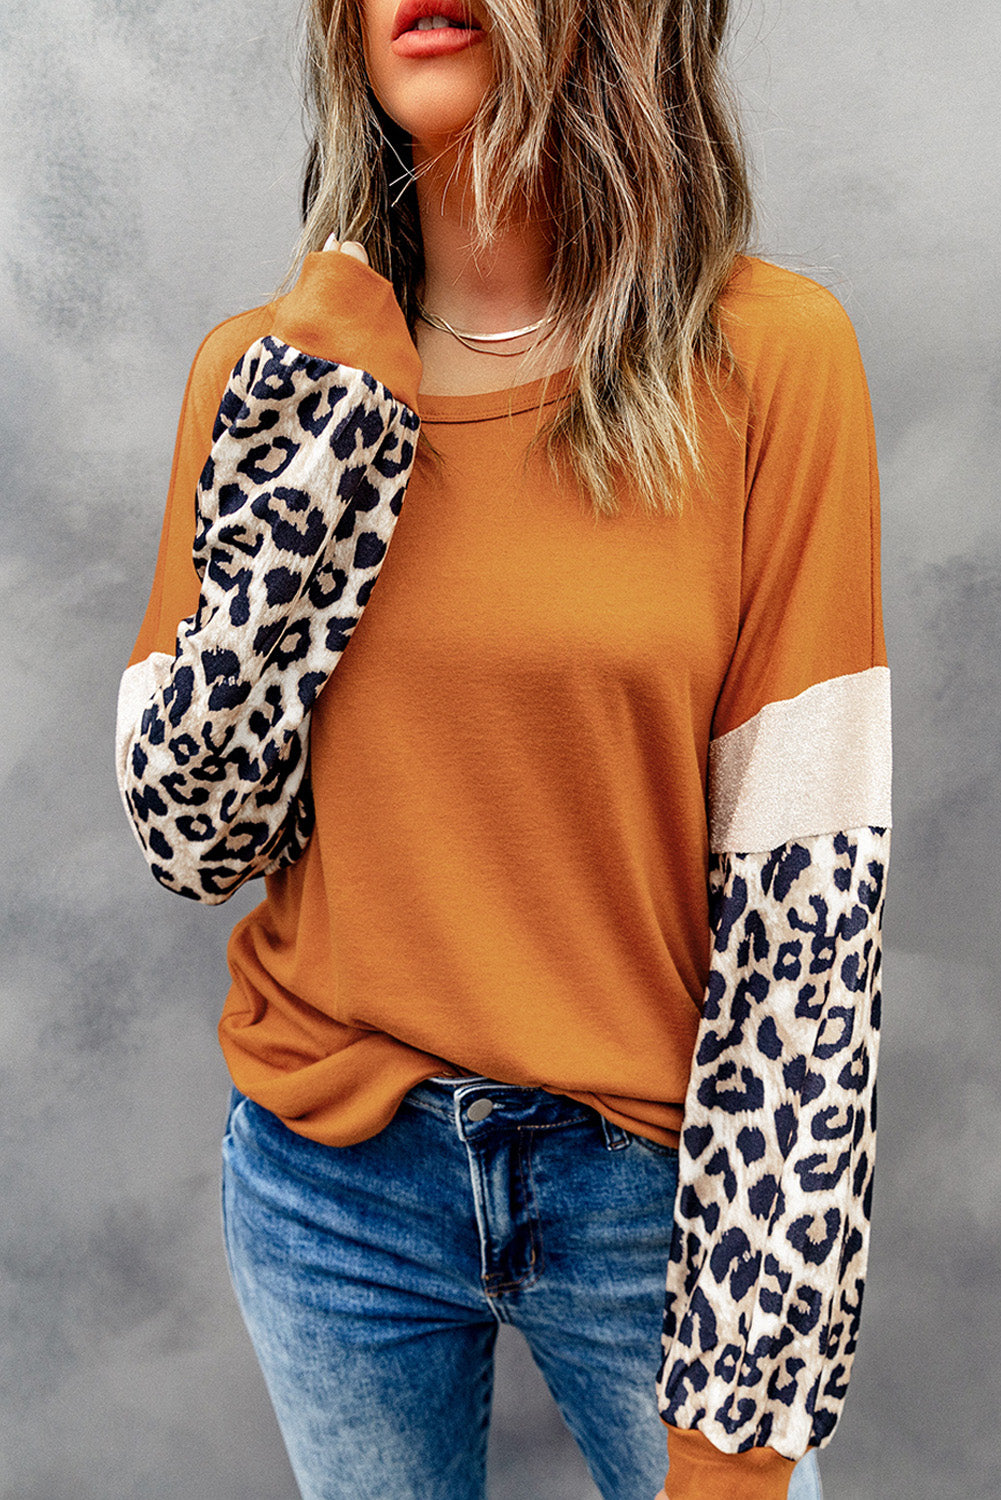 Round Neck Leopard Print Long Sleeve Top  Krazy Heart Designs Boutique Caramel S 